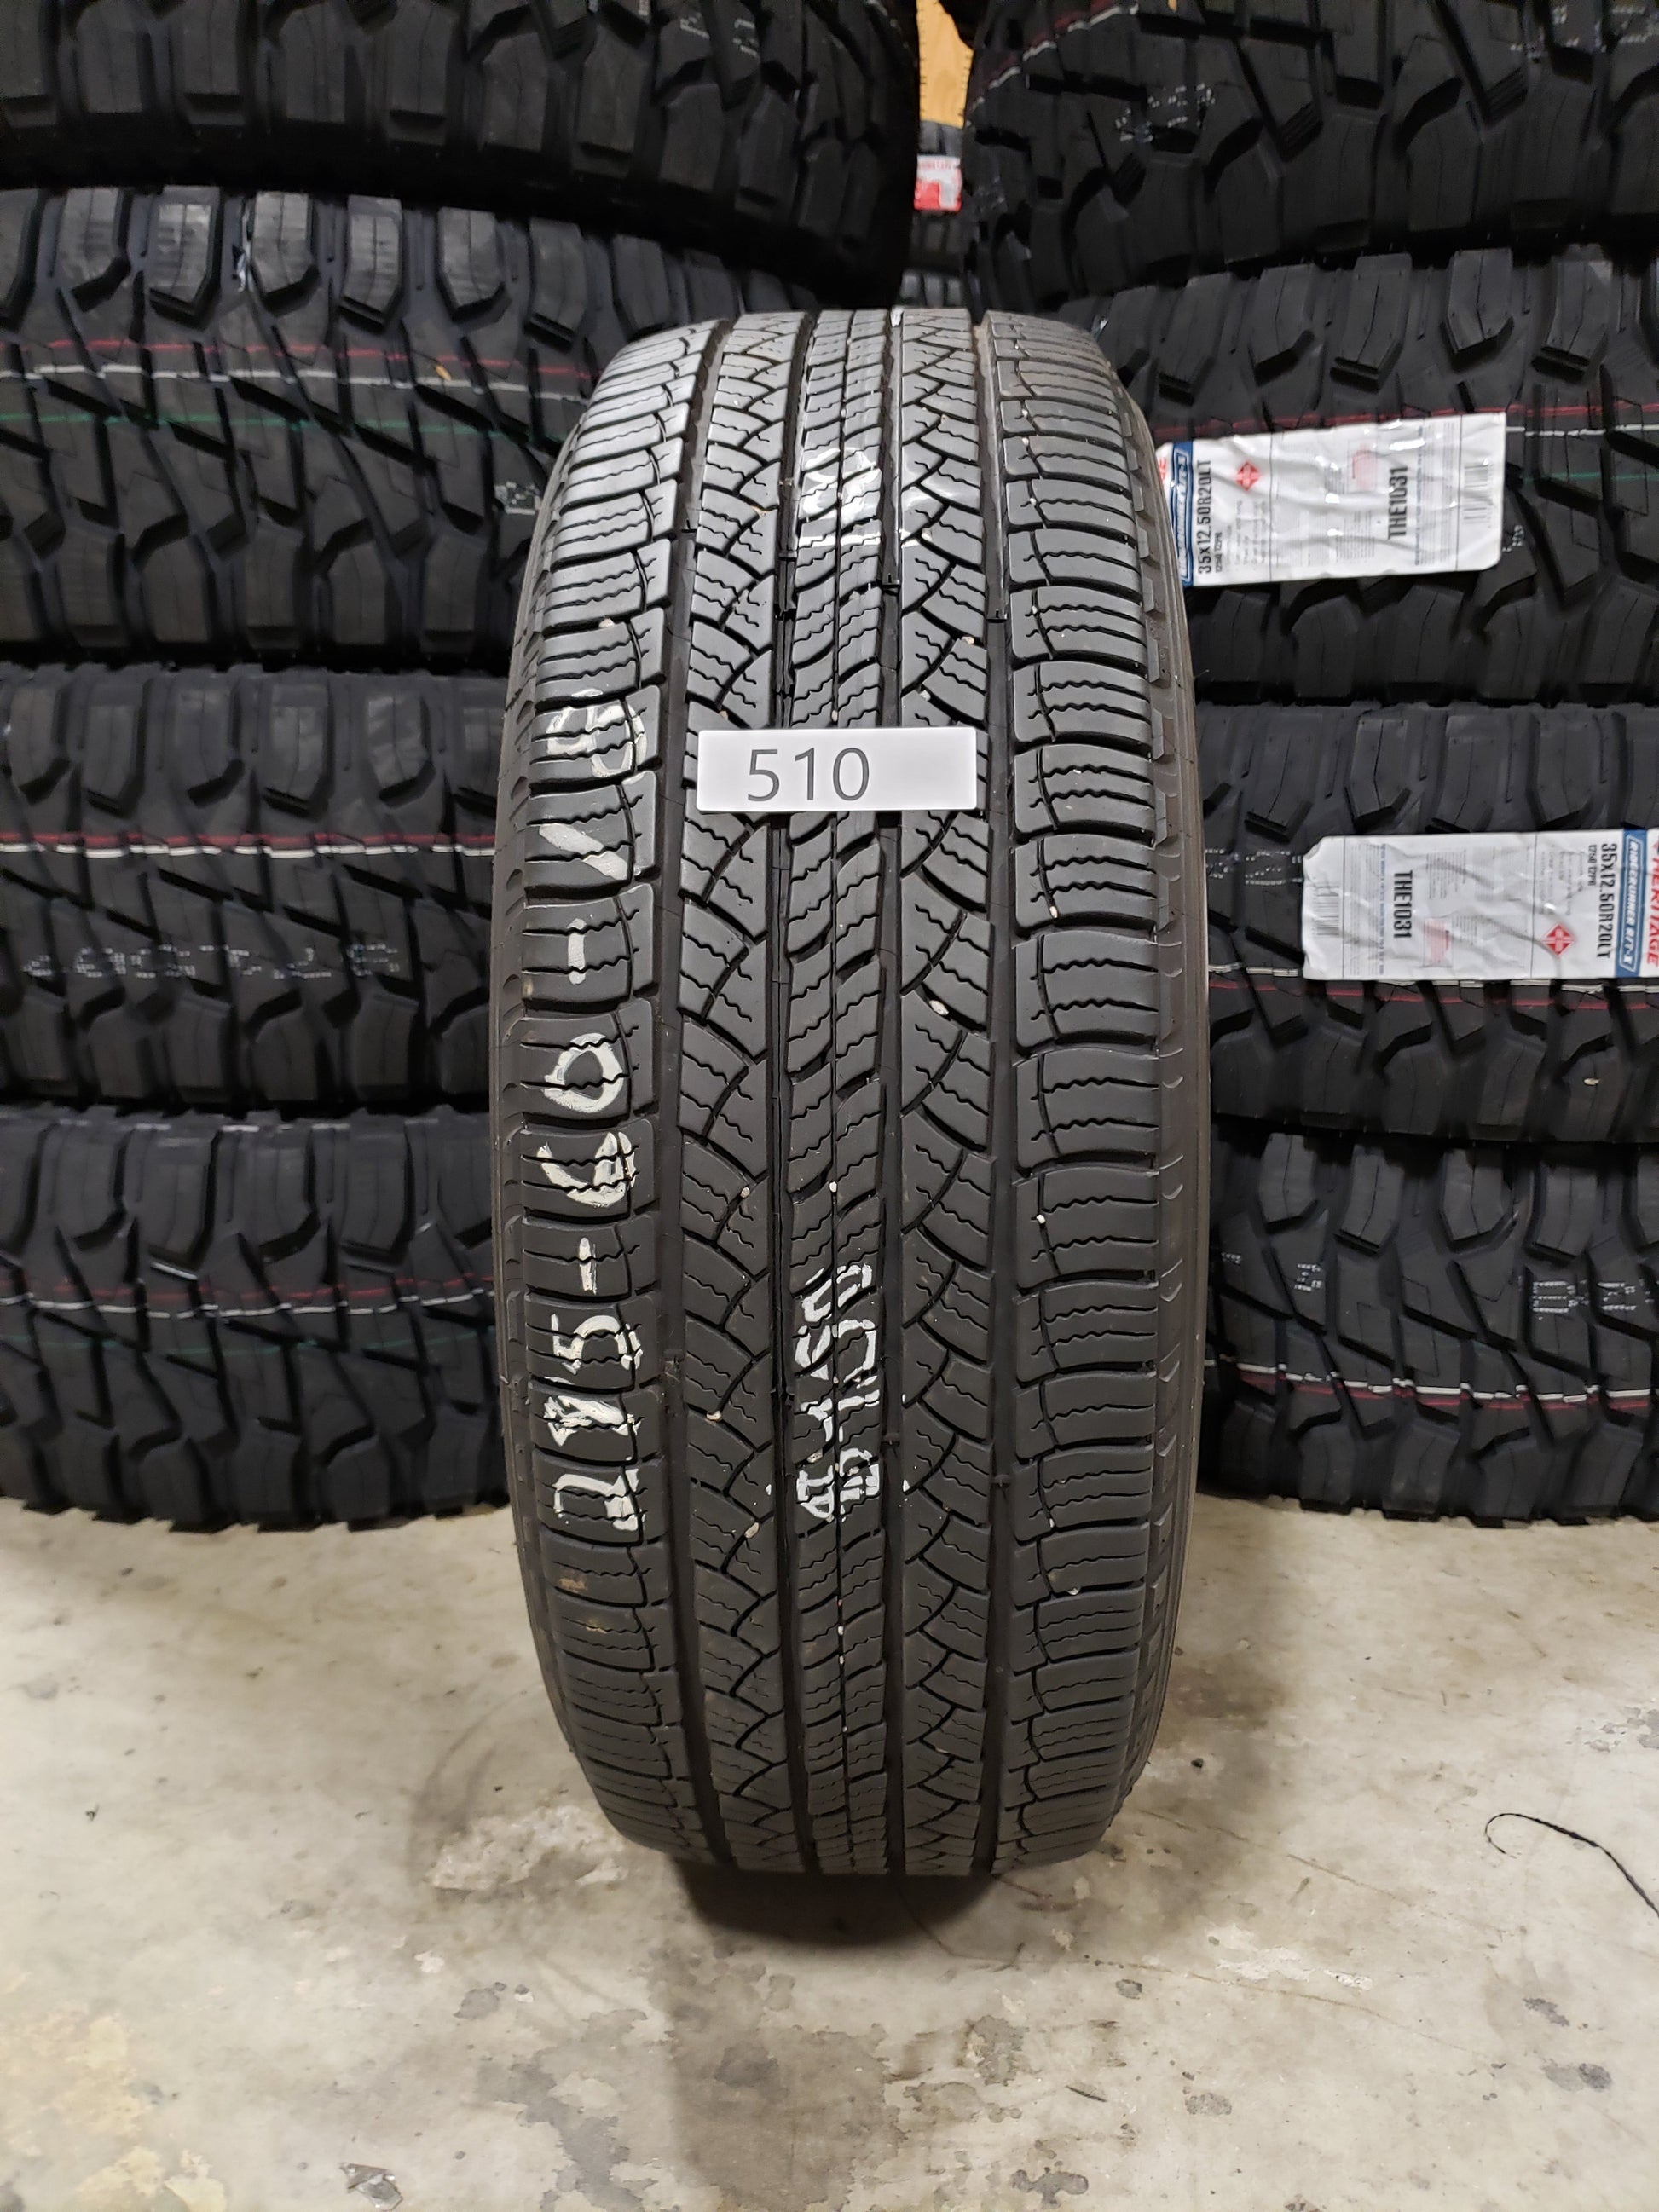 SINGLE 245/60R18 Michelin LATITUDE TOUR 105 T - Used Tires